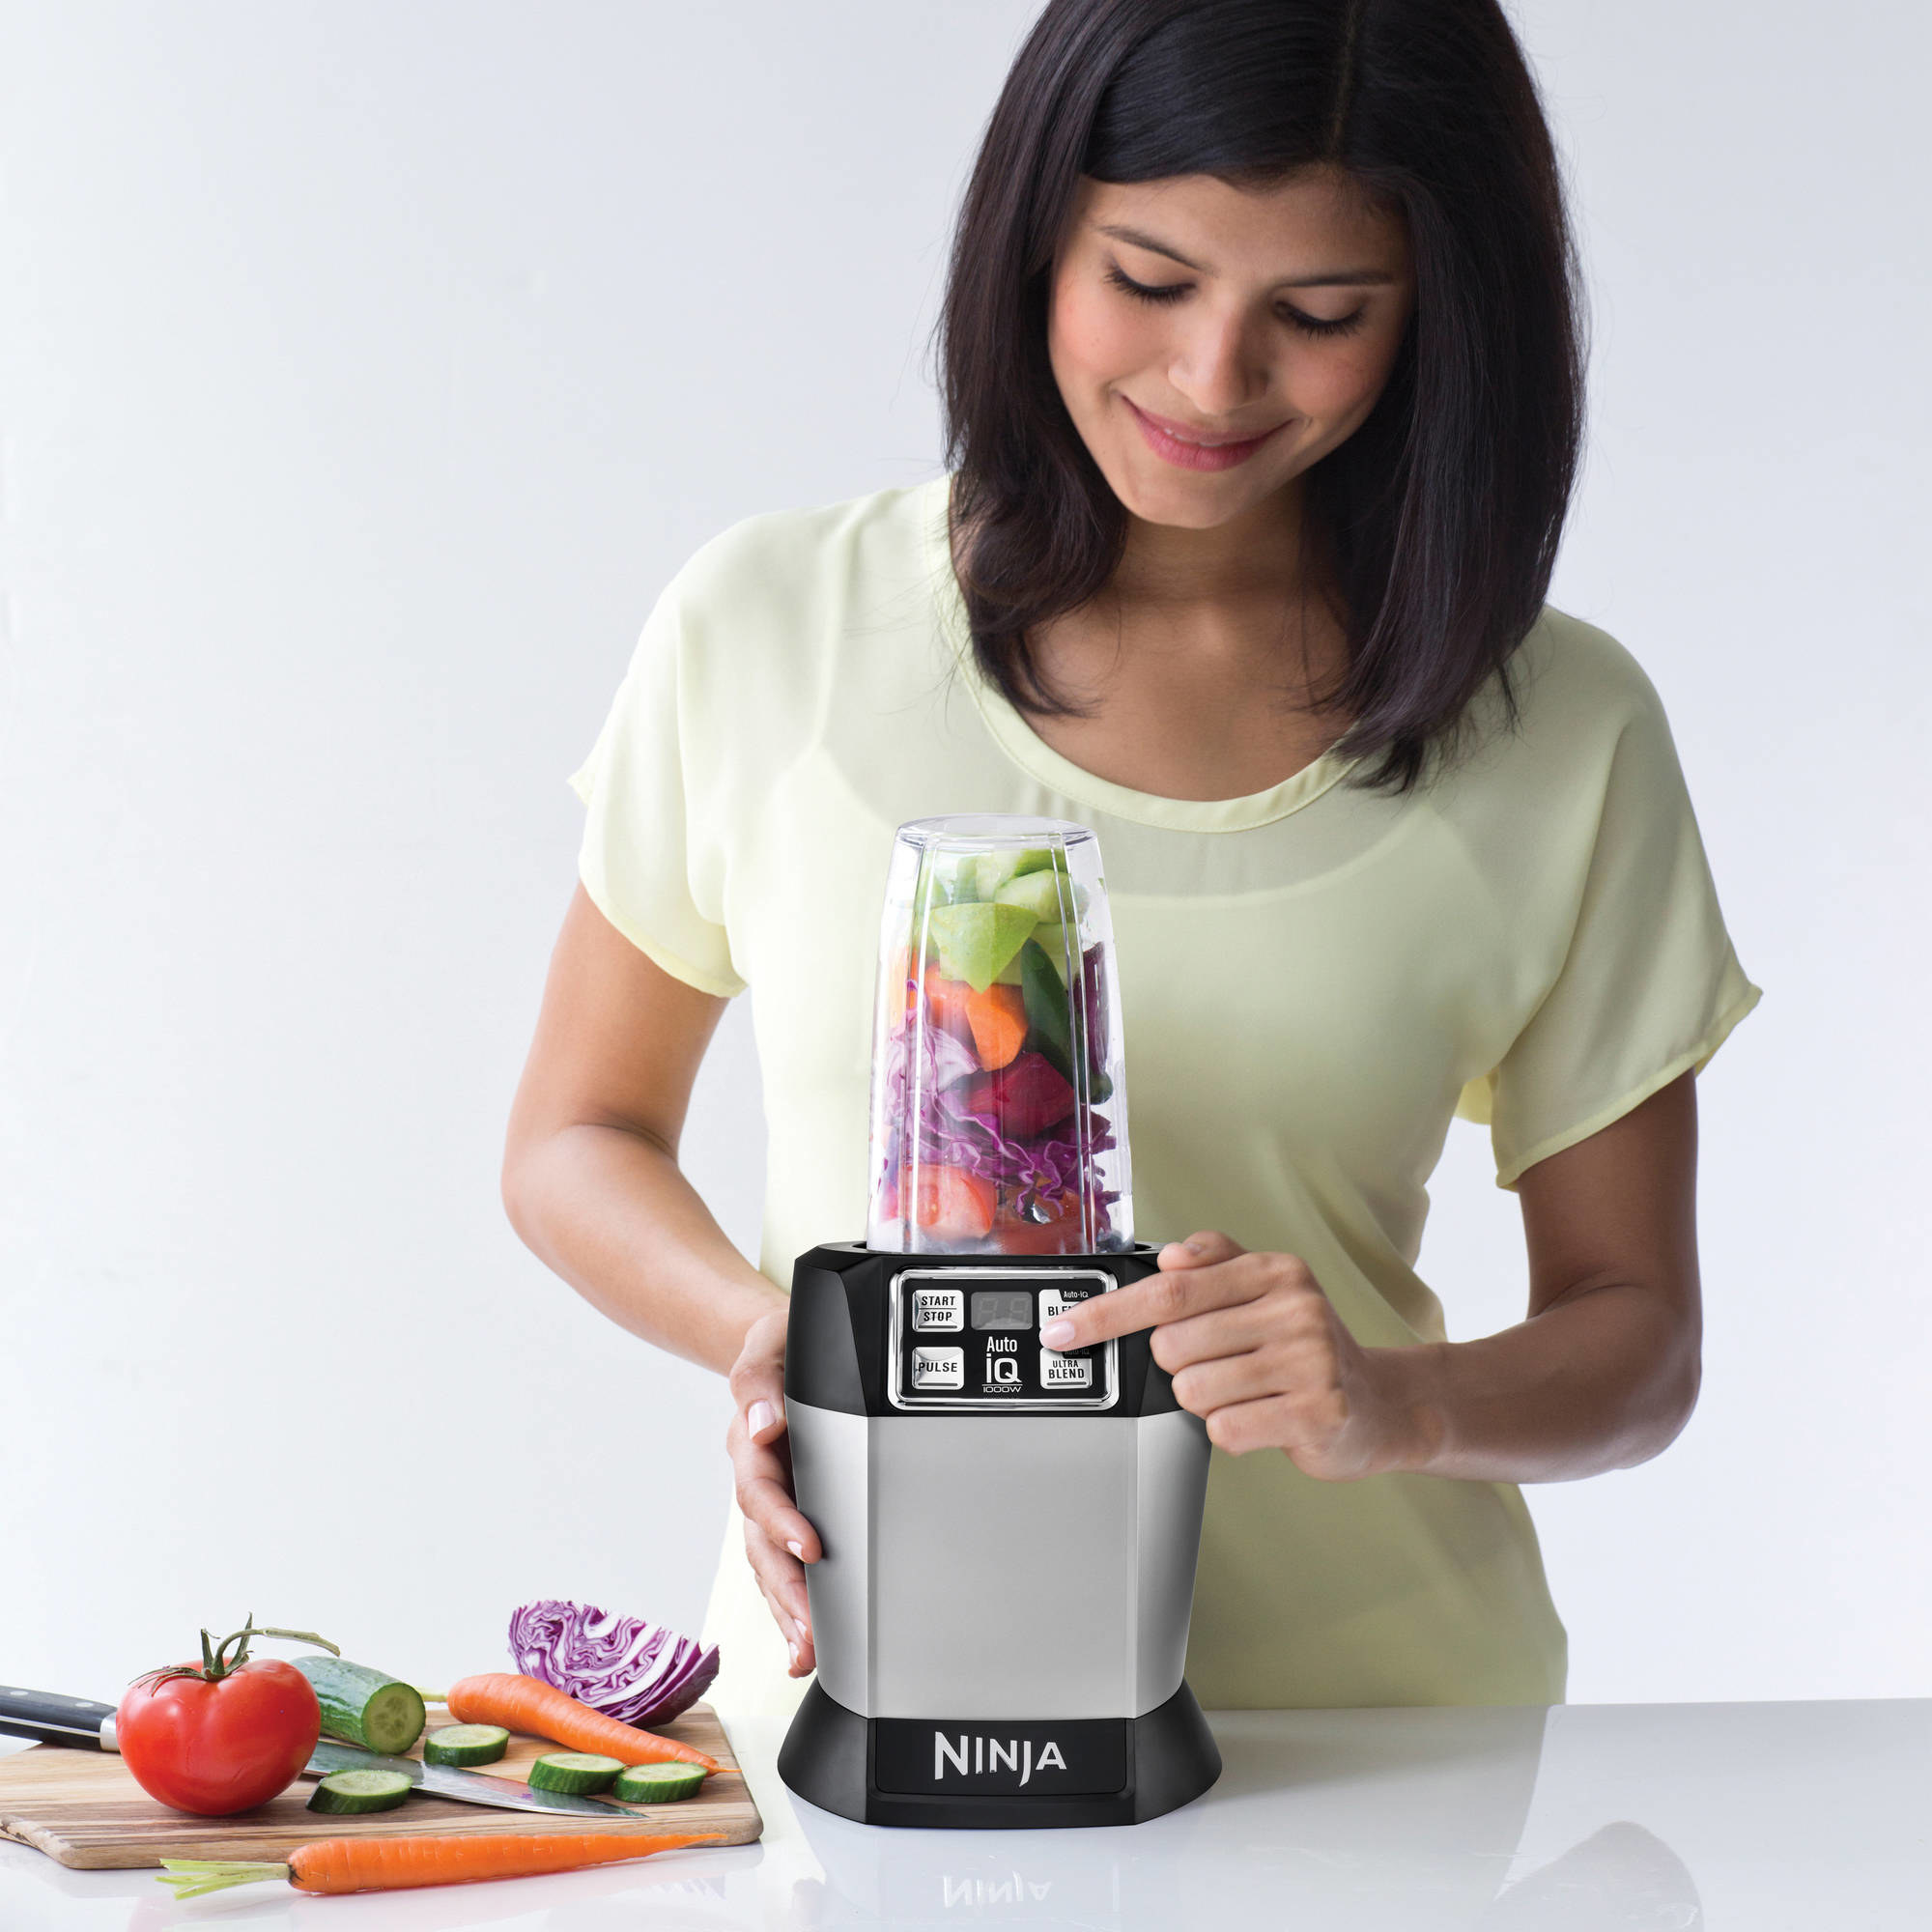 A model blending vegetables in the blender